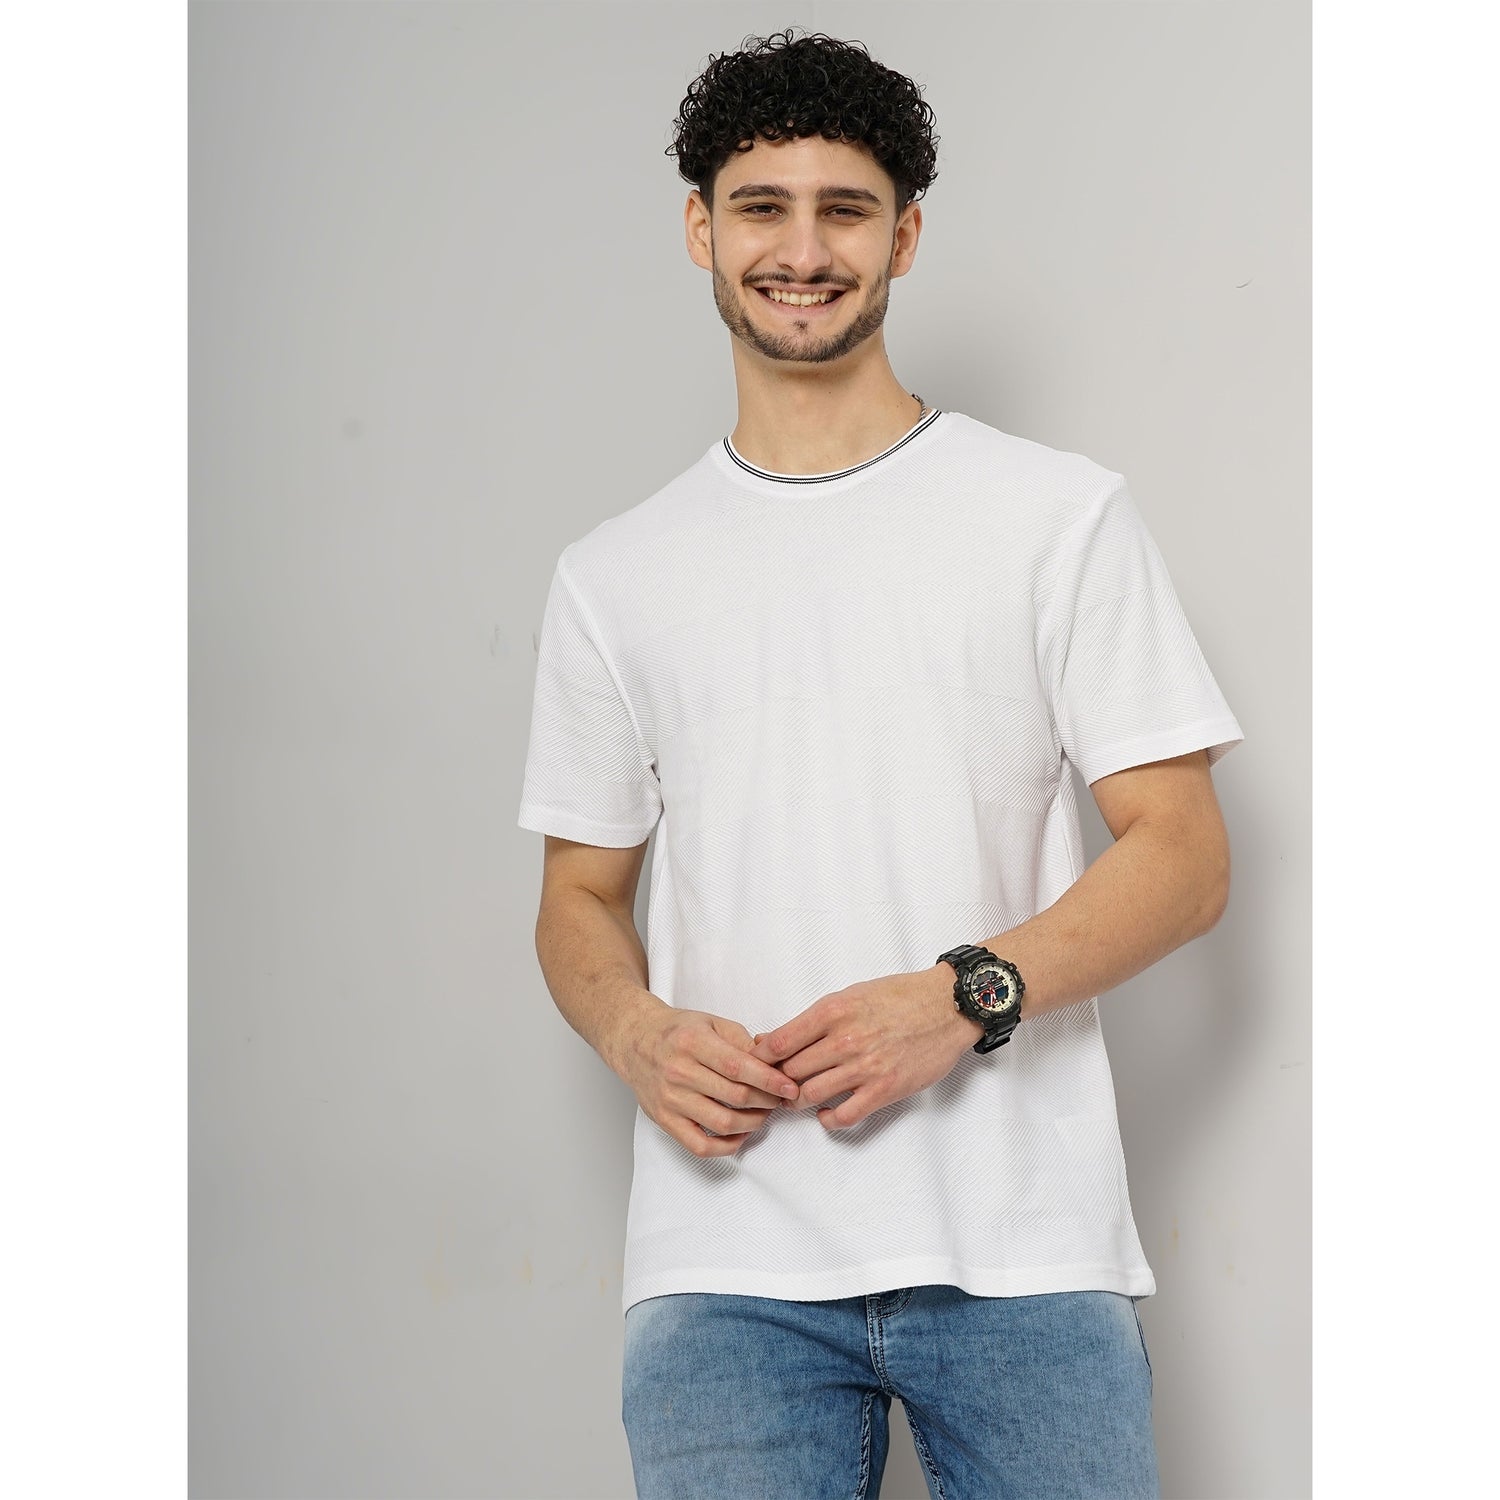 Solid White Half Round Neck Fashion Tshirt (FEHERRING)